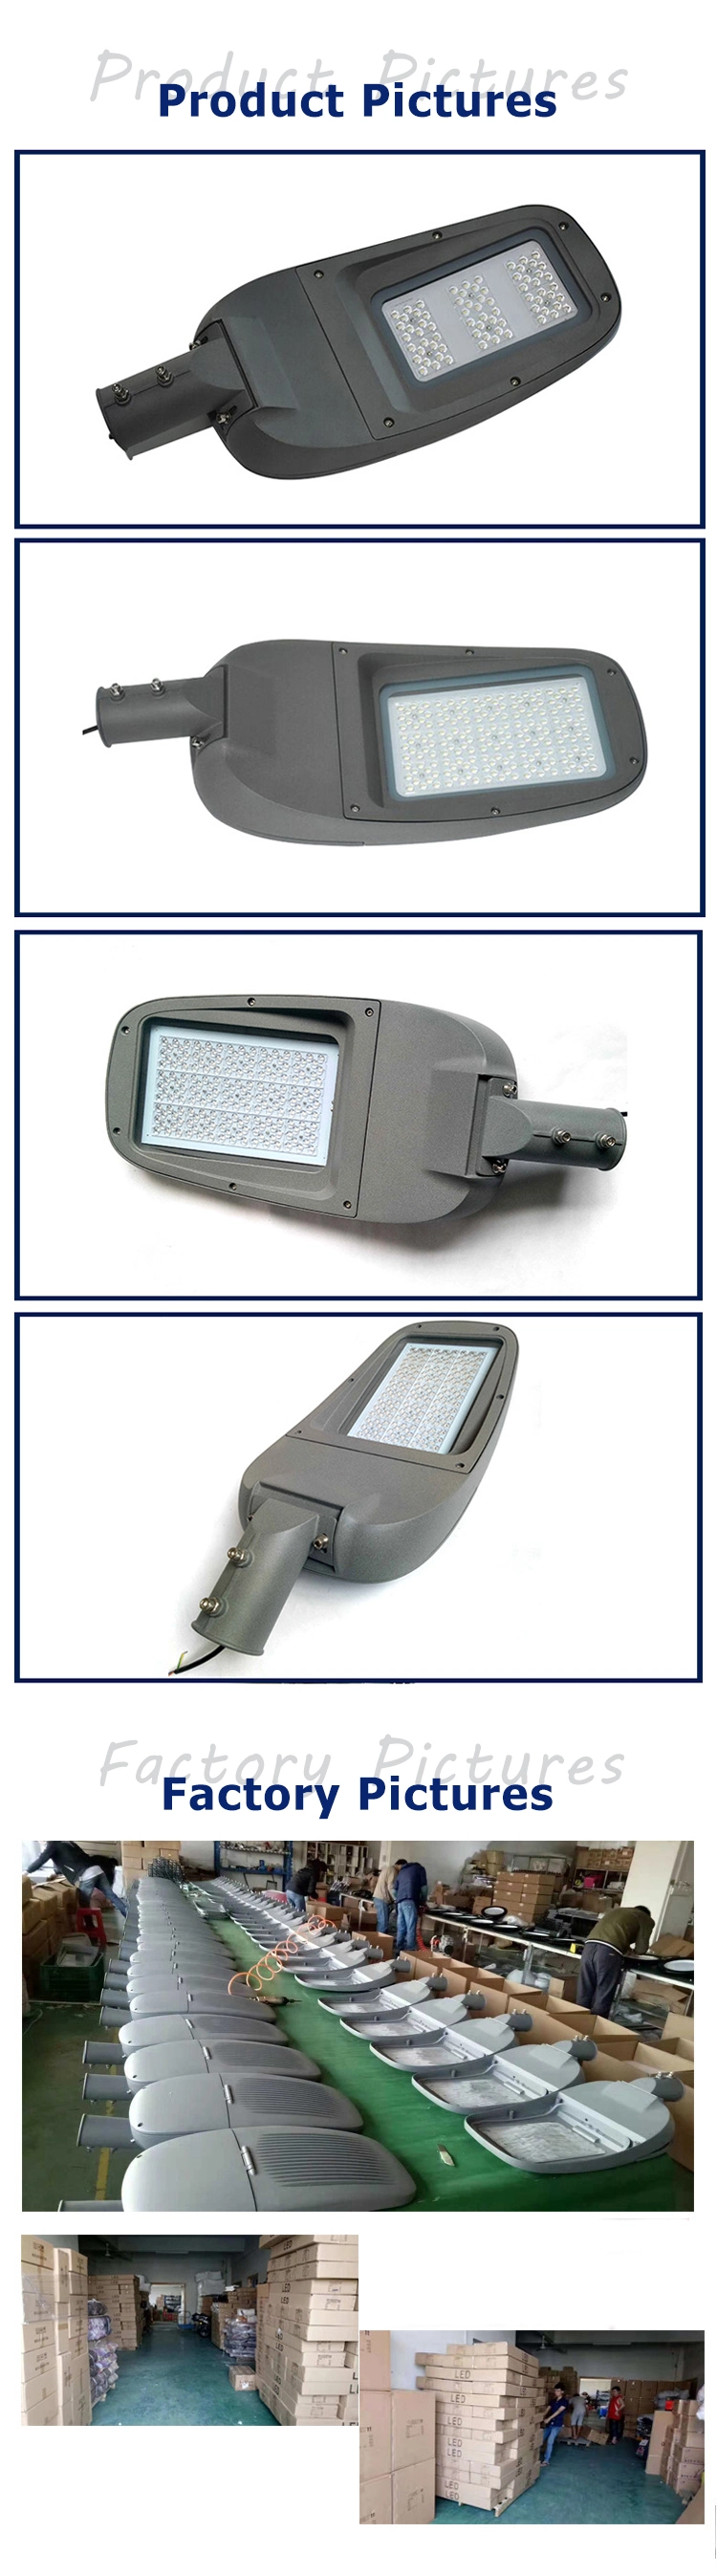 Hpzm New LED Street Light/SMD 3030 with Warranty